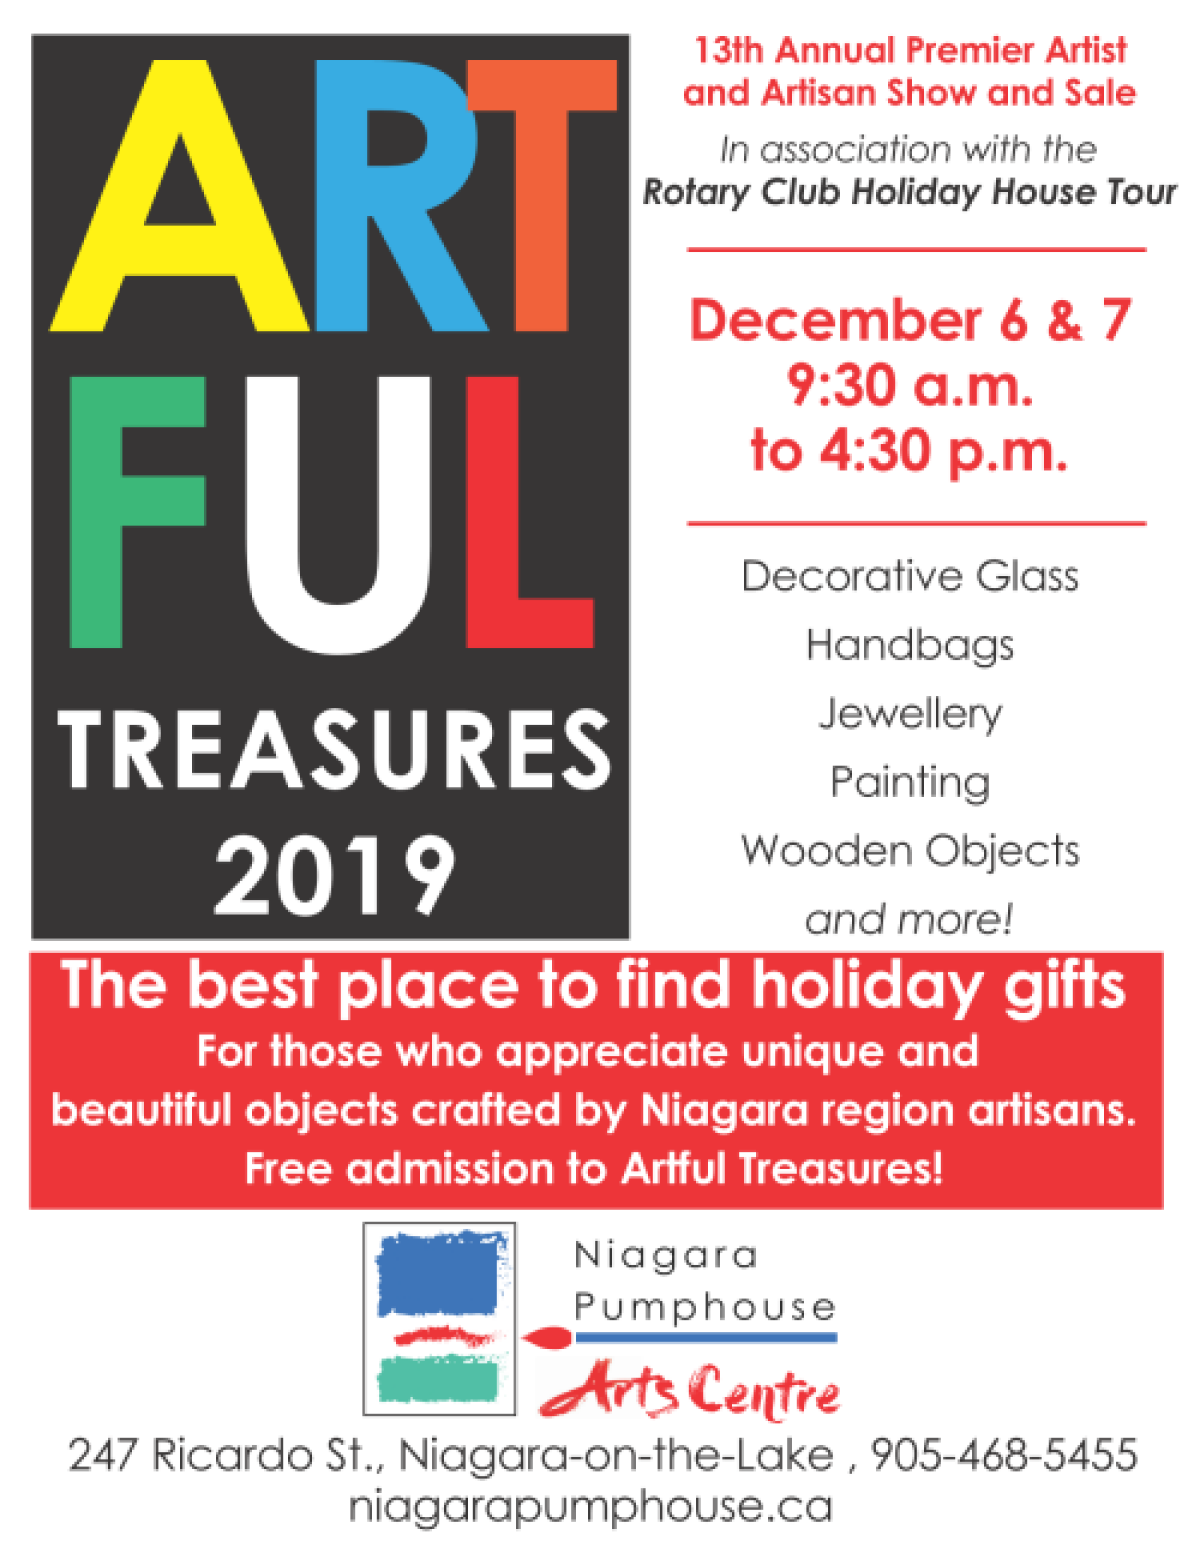 Artful Treasures 2019 at the Niagara Pumphouse Arts Centre